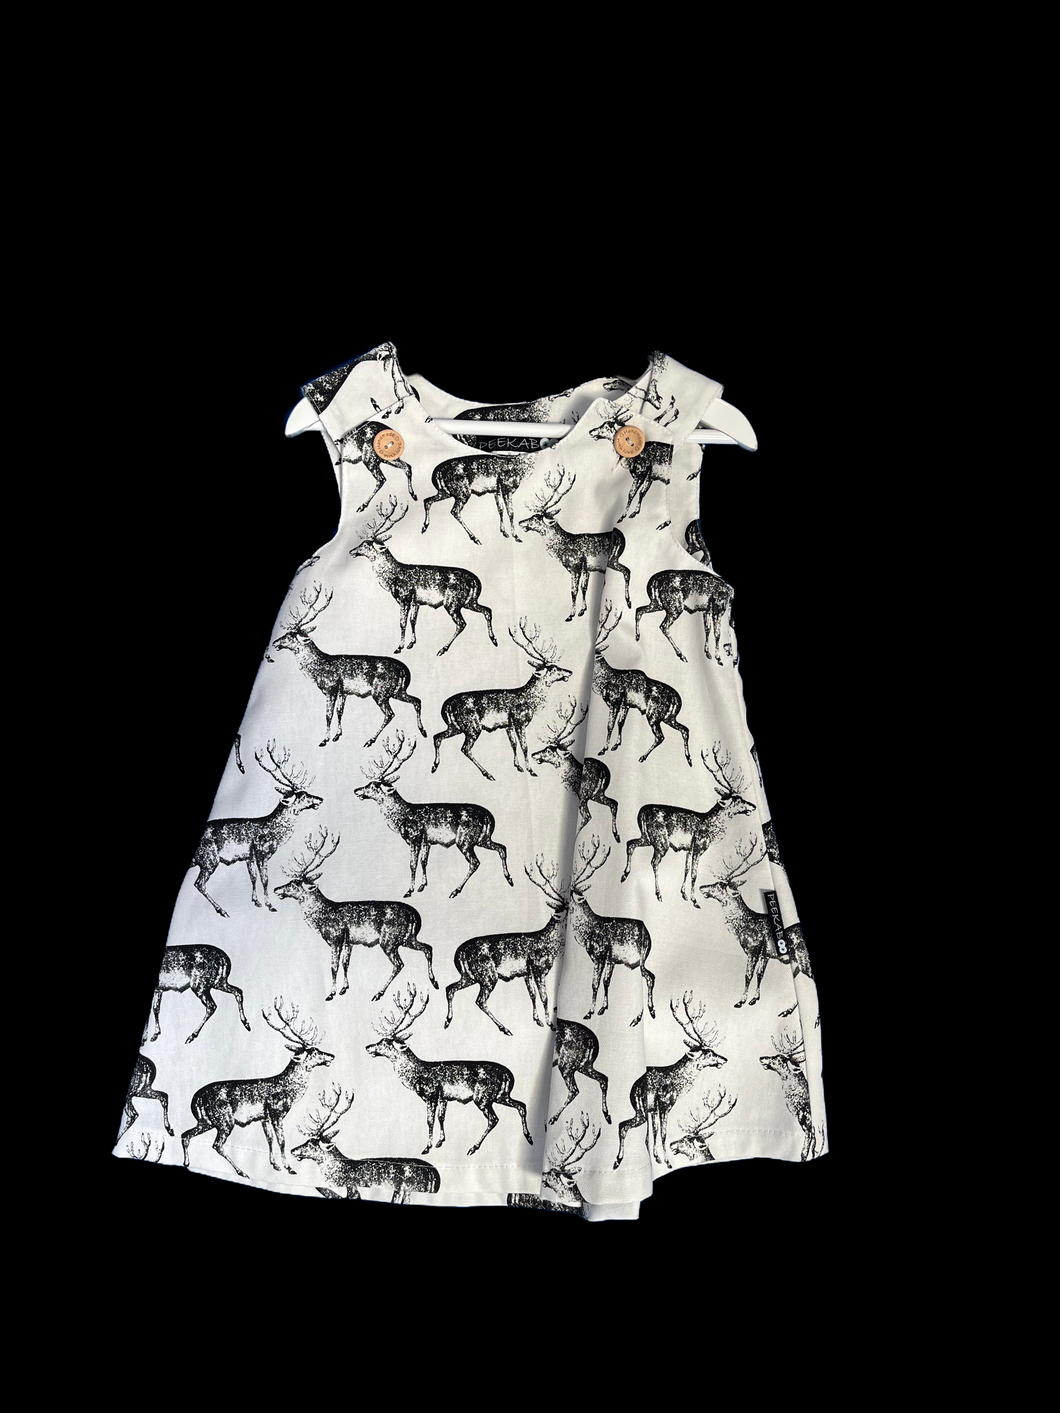 Deer dress